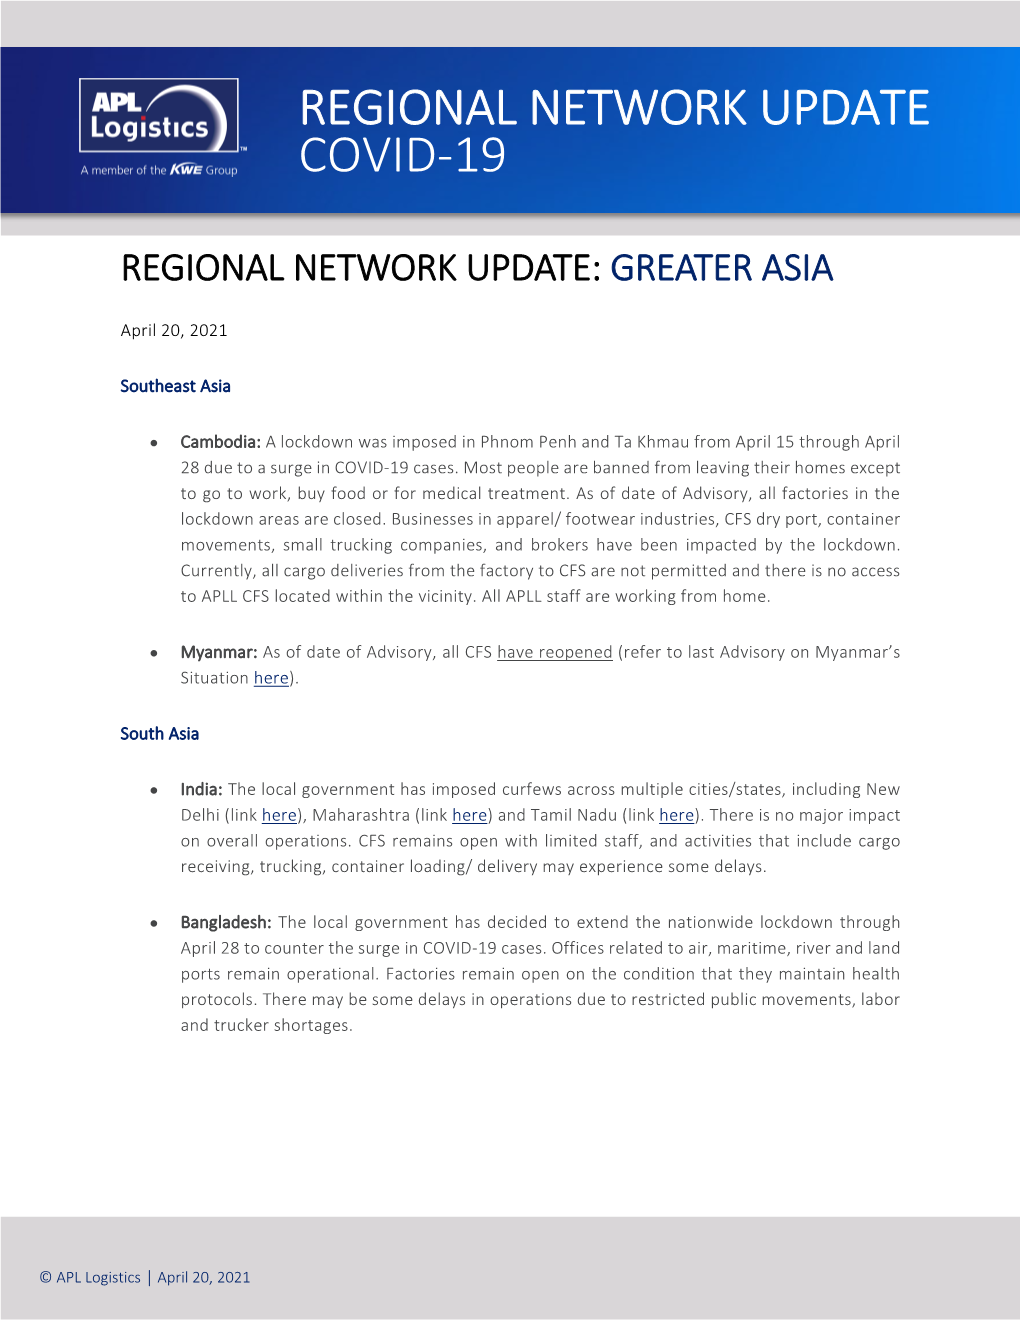 Regional Network Update Covid-19